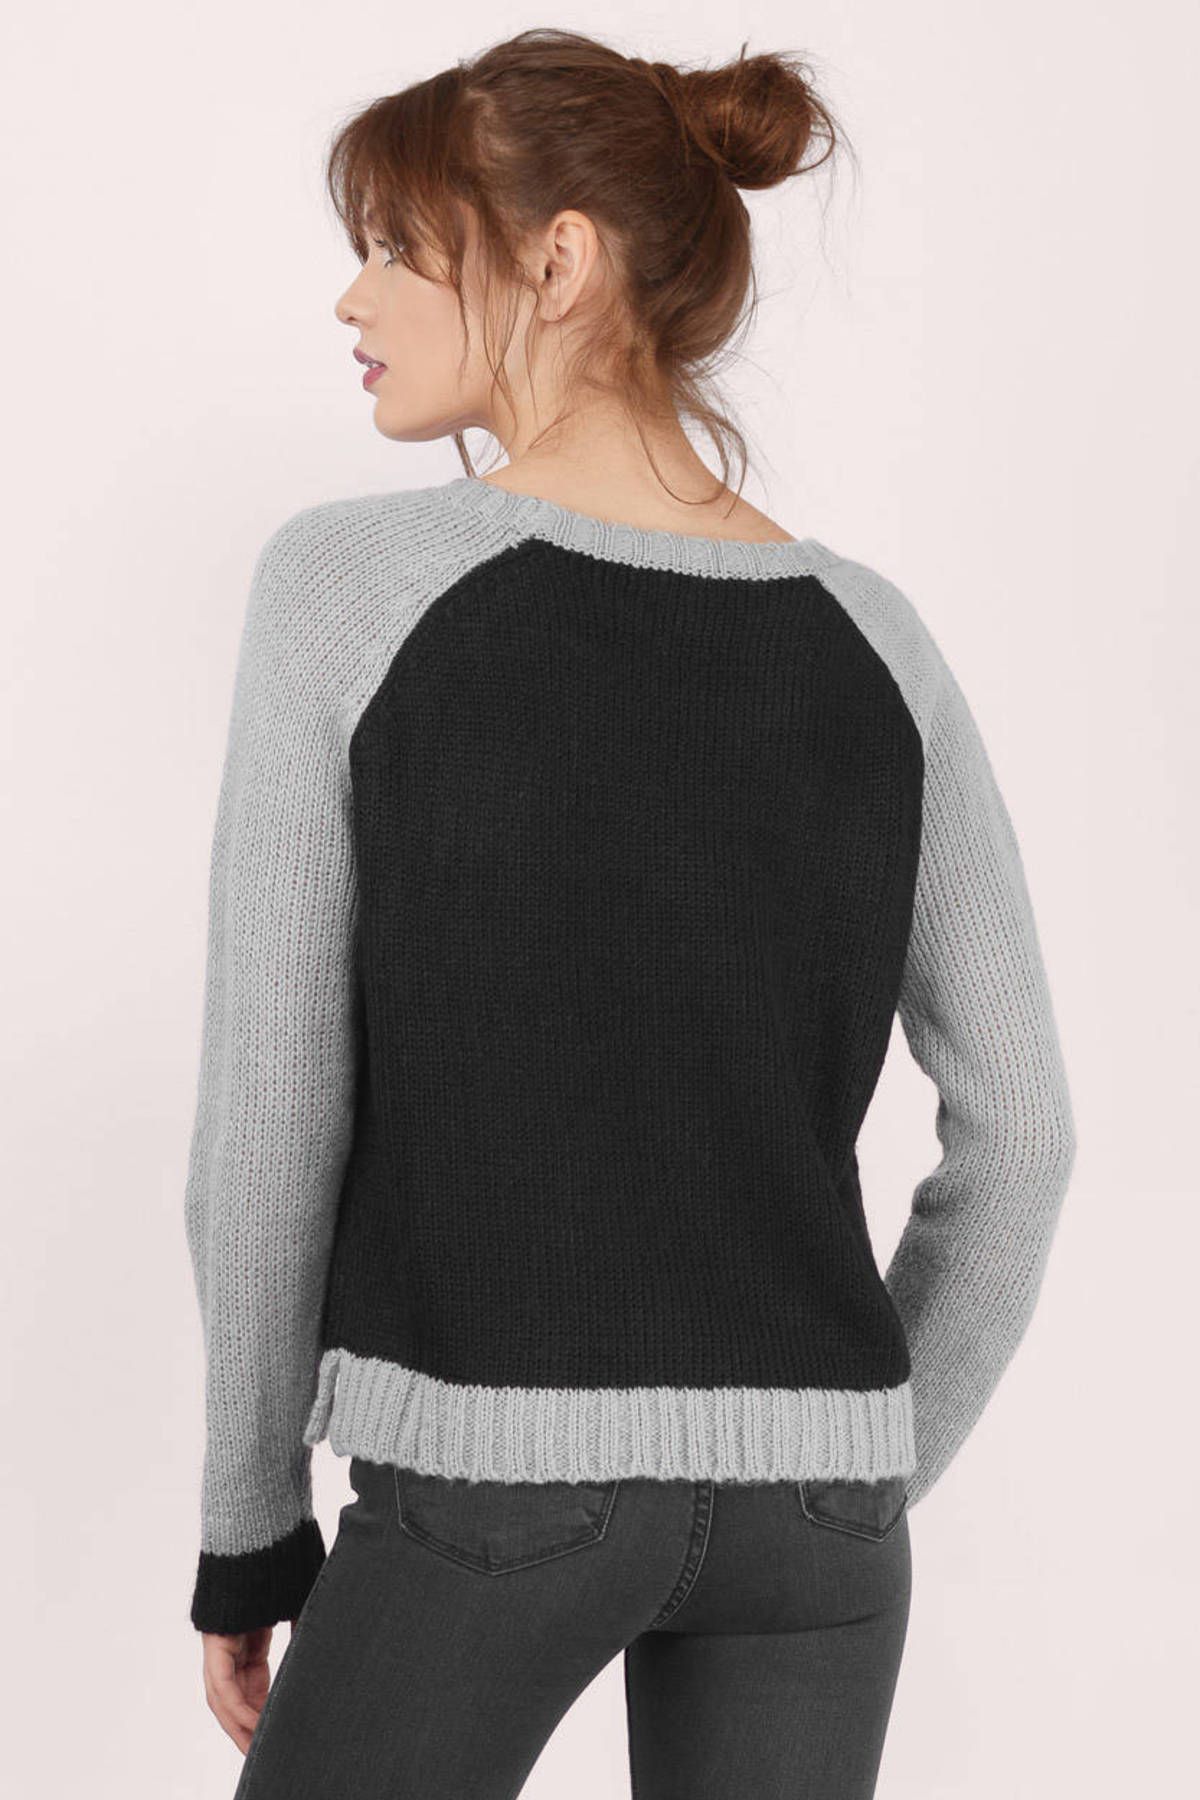 Trendy Blue Sweater - Long Sleeve Sweater - Navy & Ivory Sweater - $10 ...